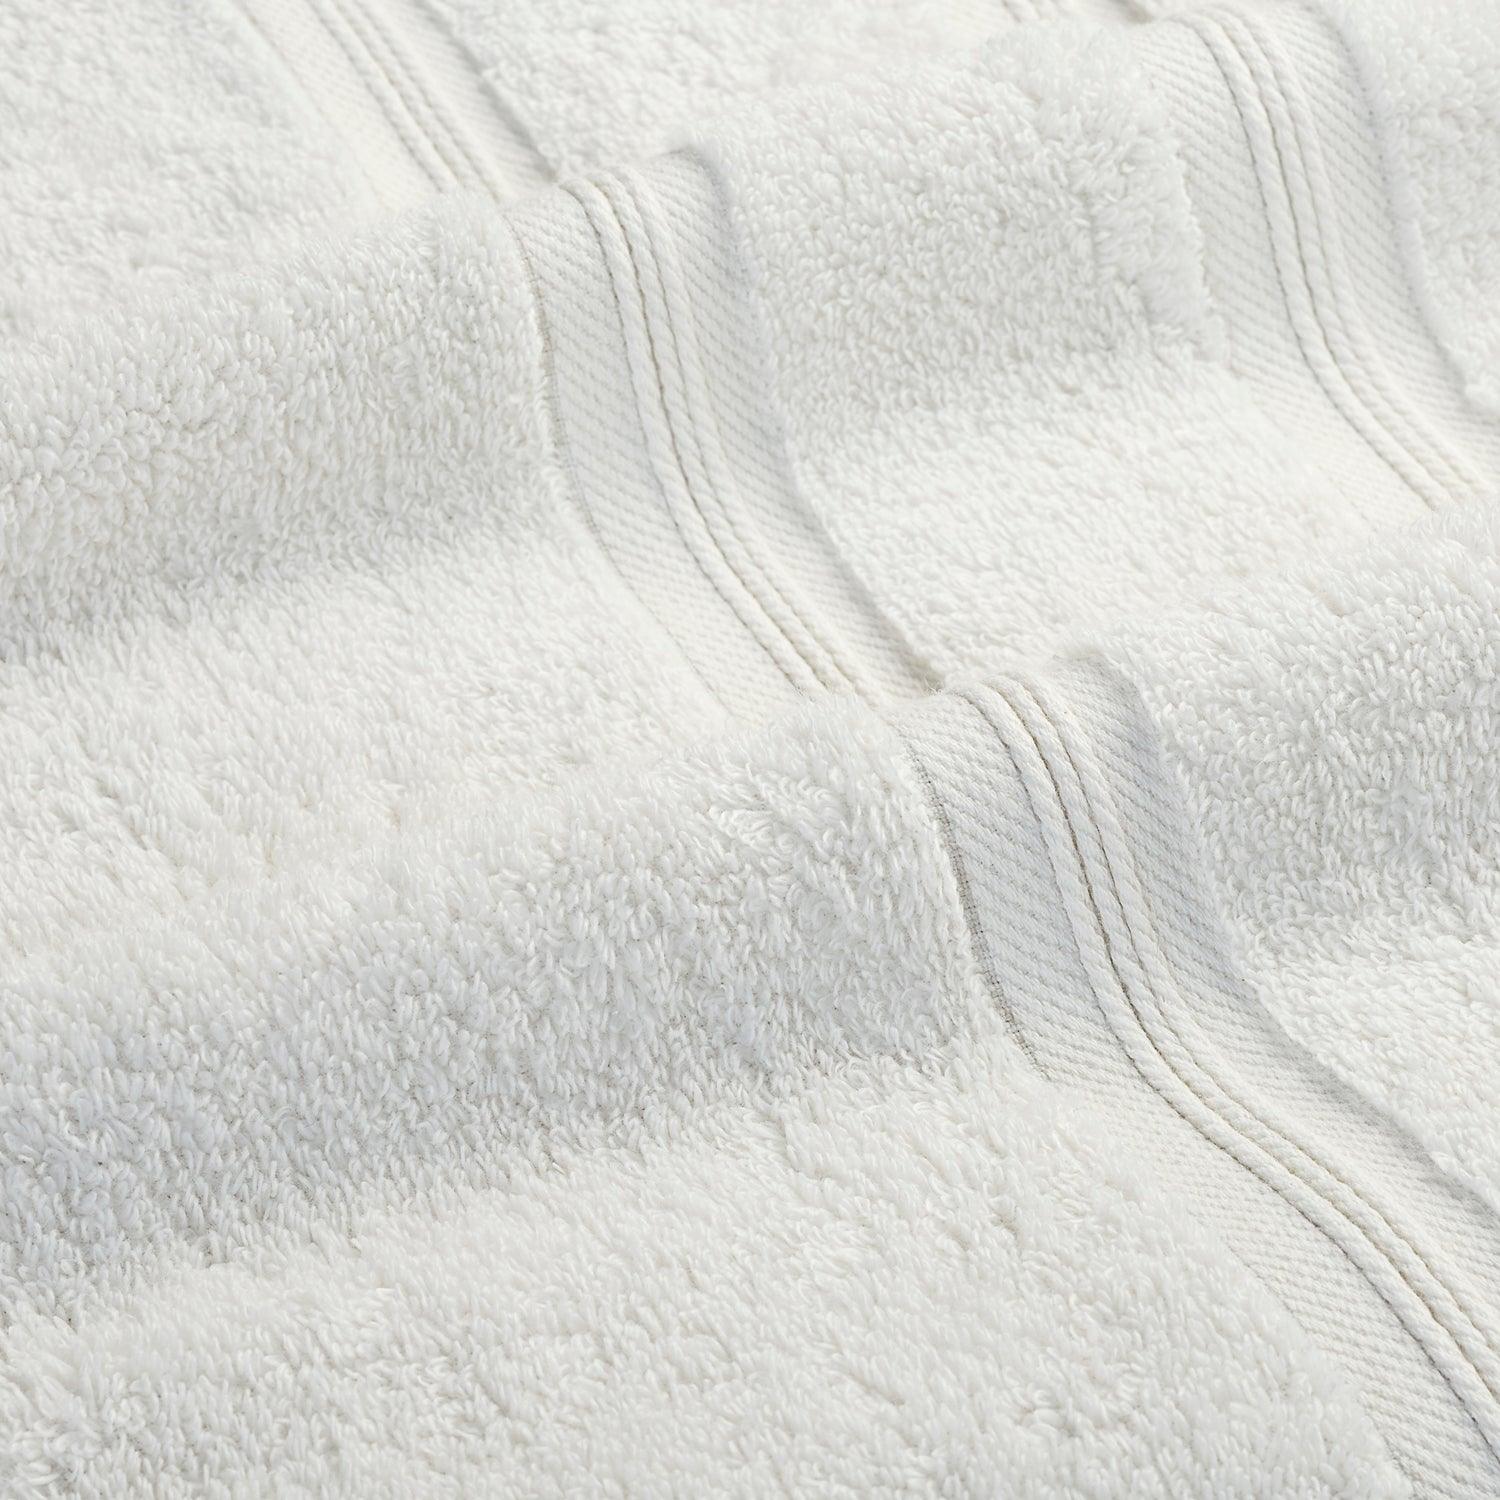  Superior Smart Dry Zero Twist Cotton 6-Piece Assorted Towel Set - Ivory